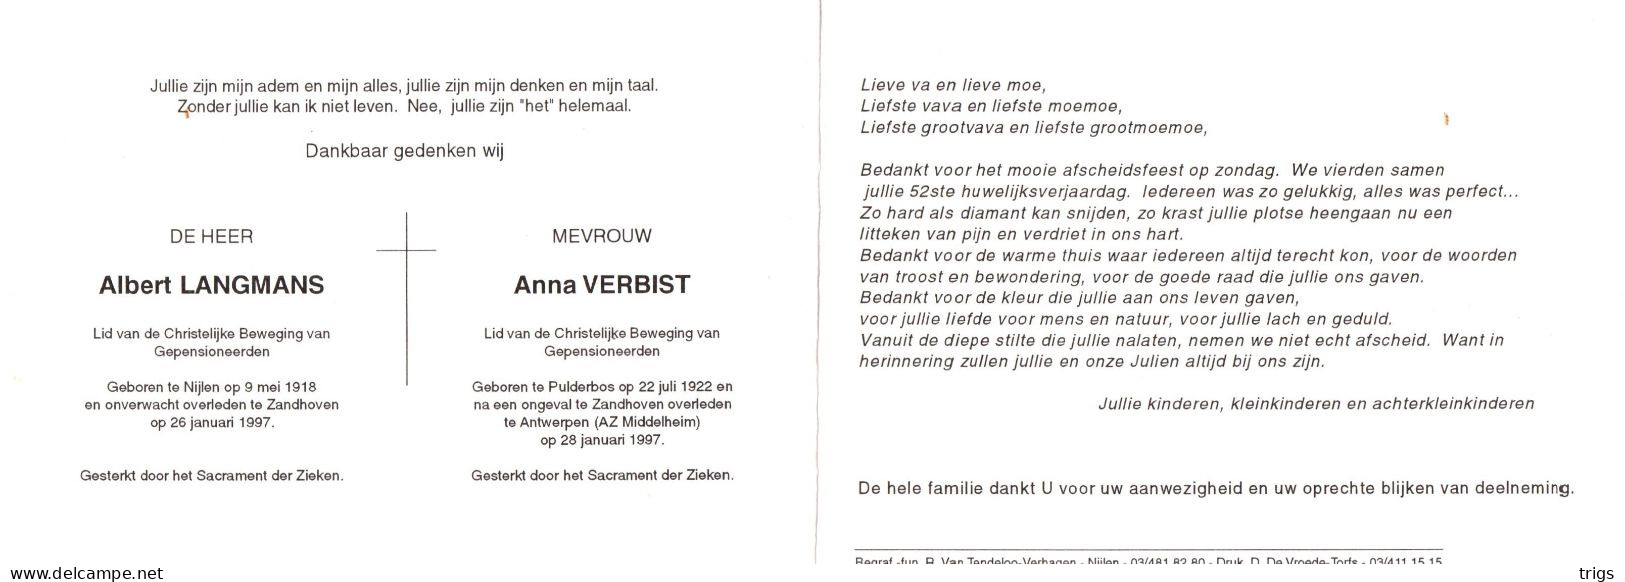 Albert Langmans (1918-1997) & Anna Verbist (1922-1997) - Devotion Images